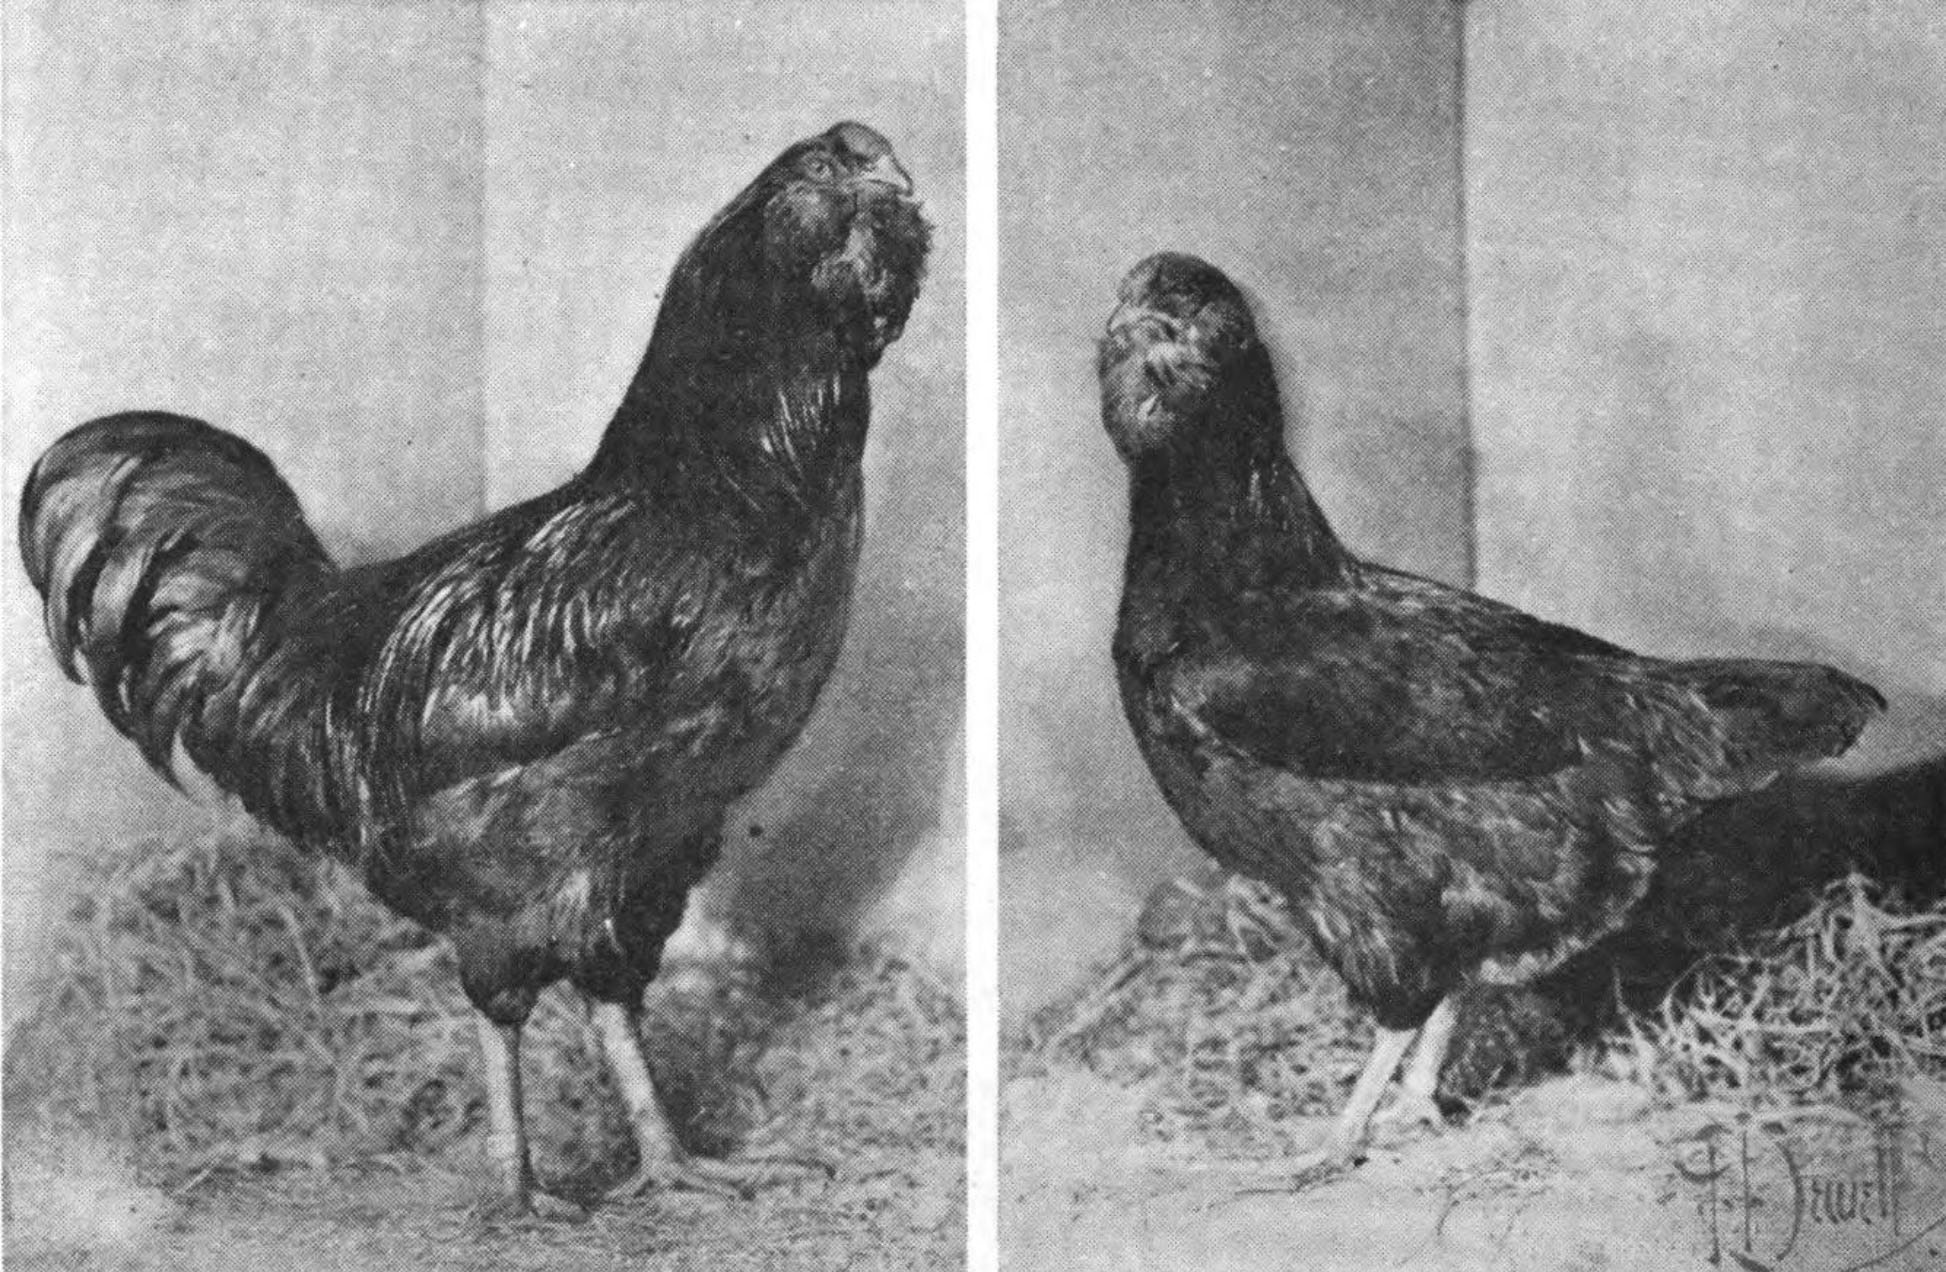 Янзе порода кур – описание с фото и видео